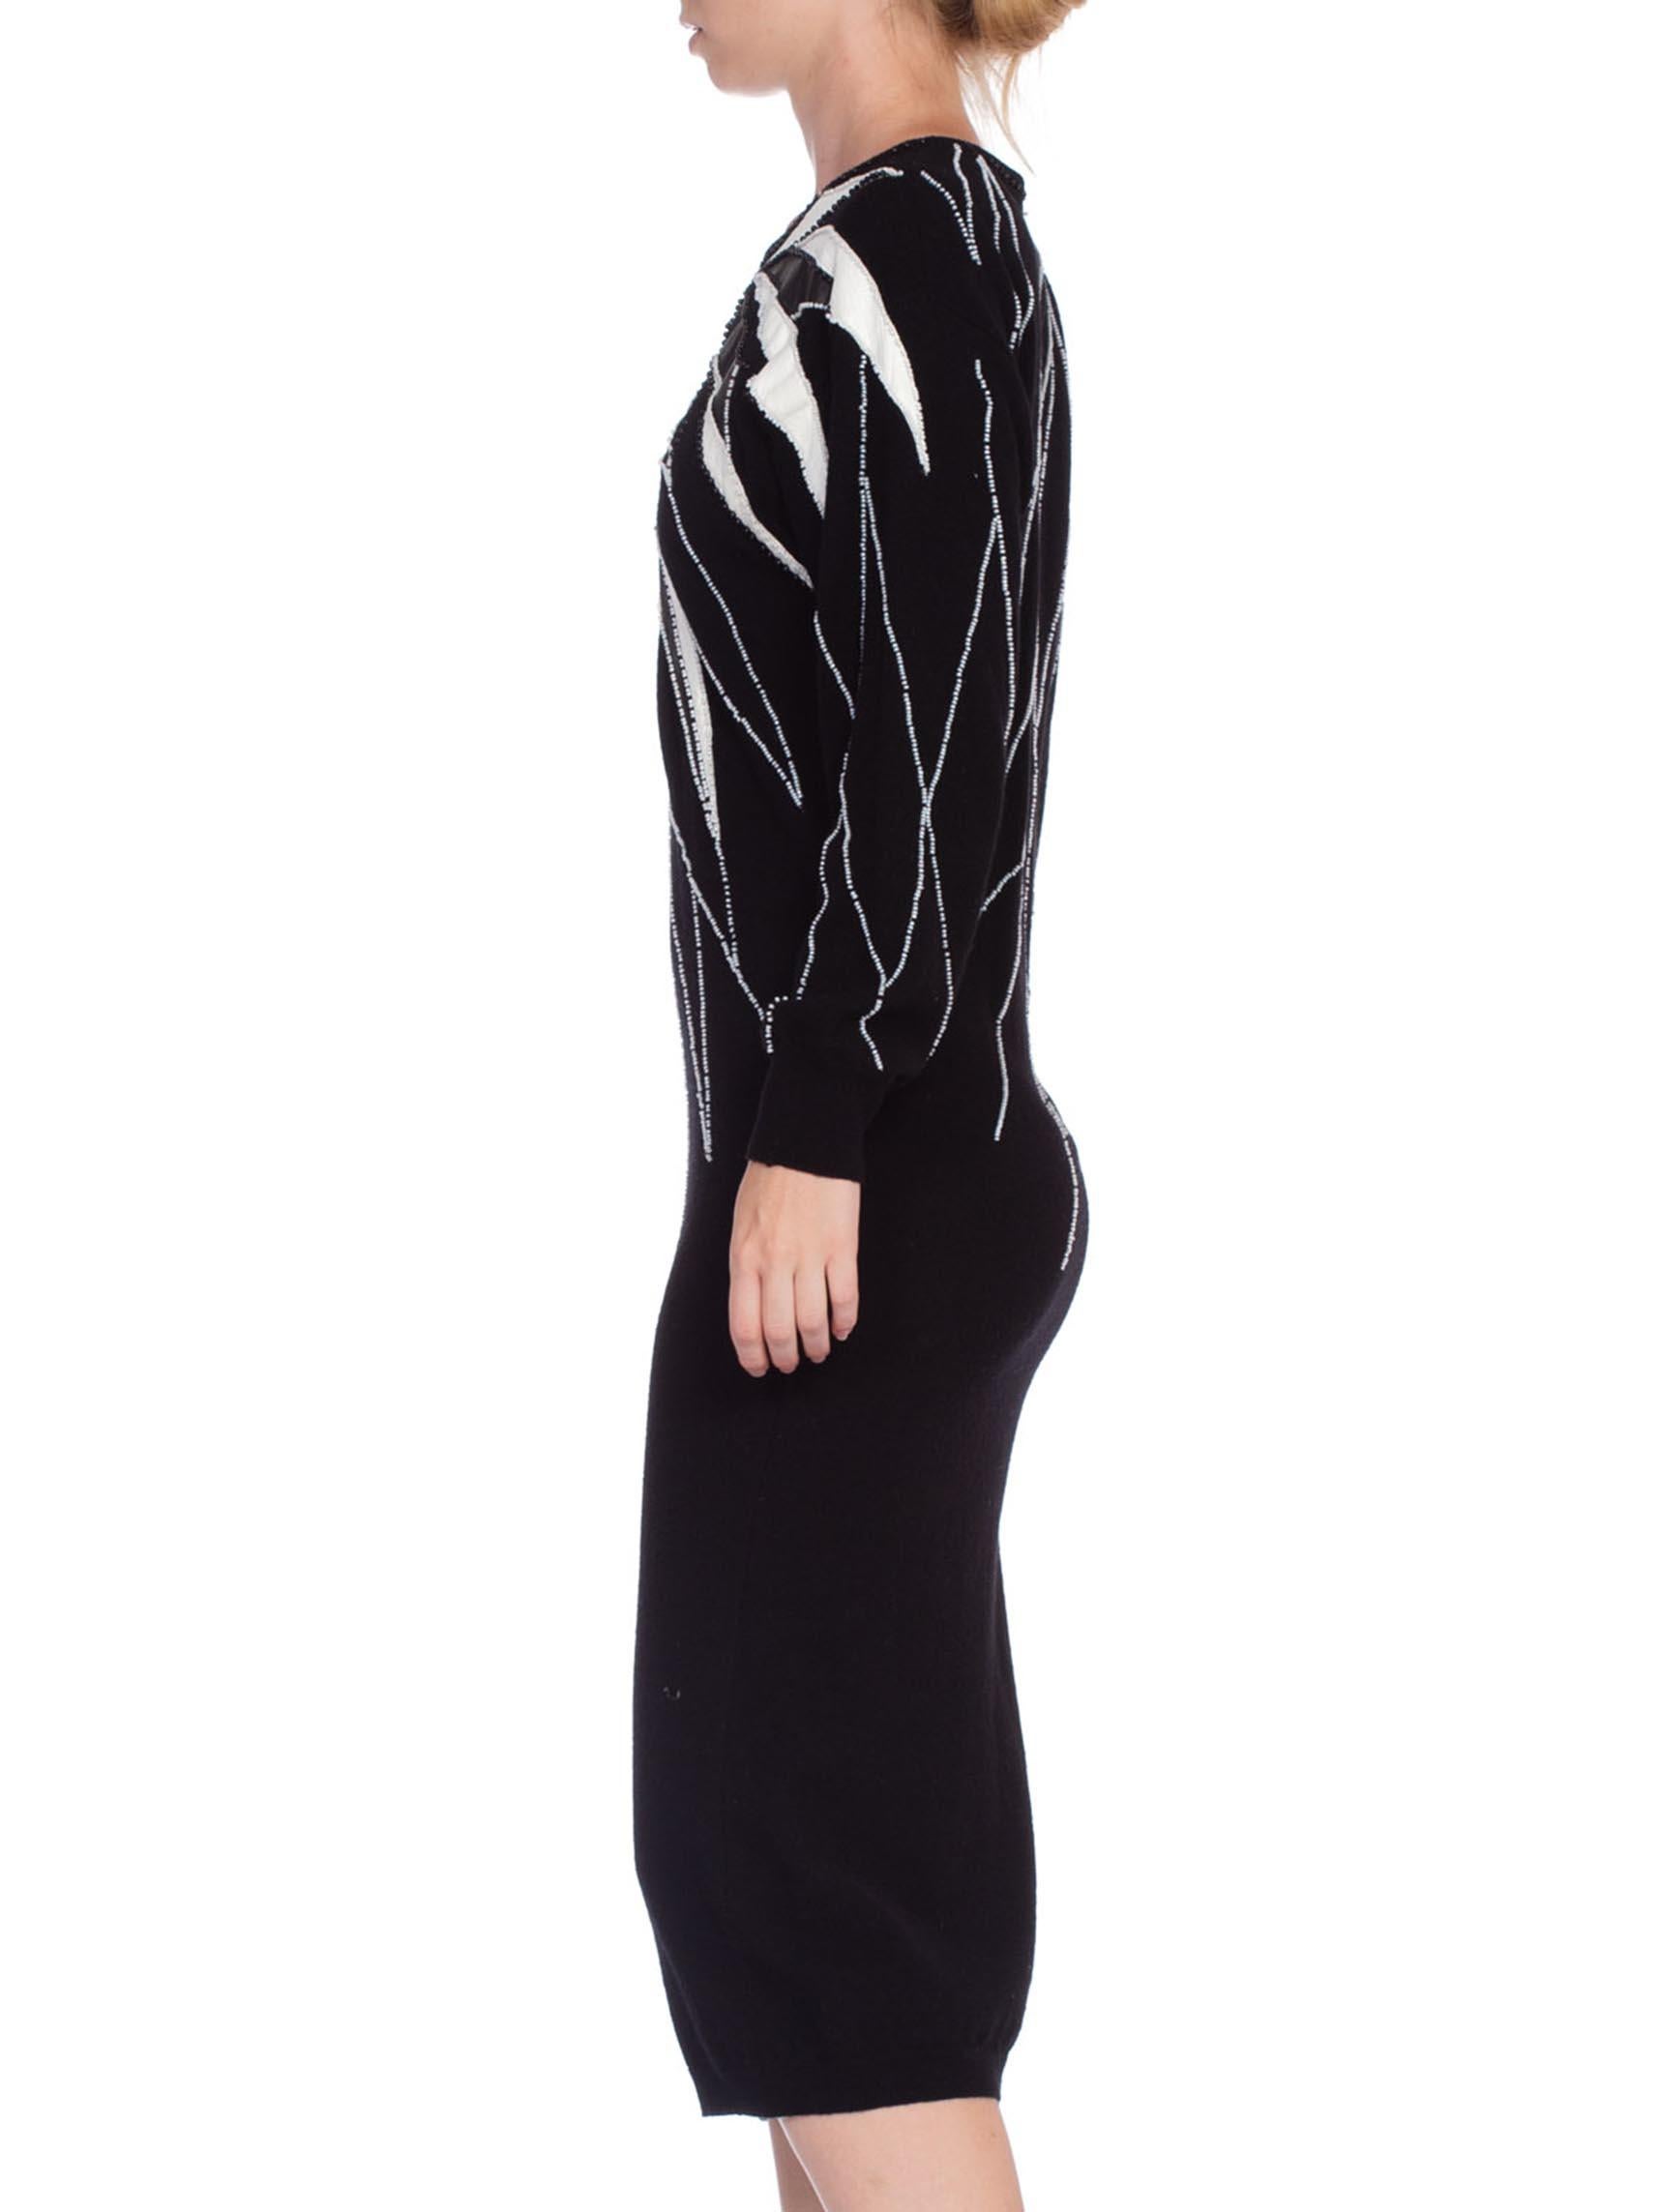 Women's 1980'S Black & White Hand Beaded Wool Long Sleeve Sweater Dress